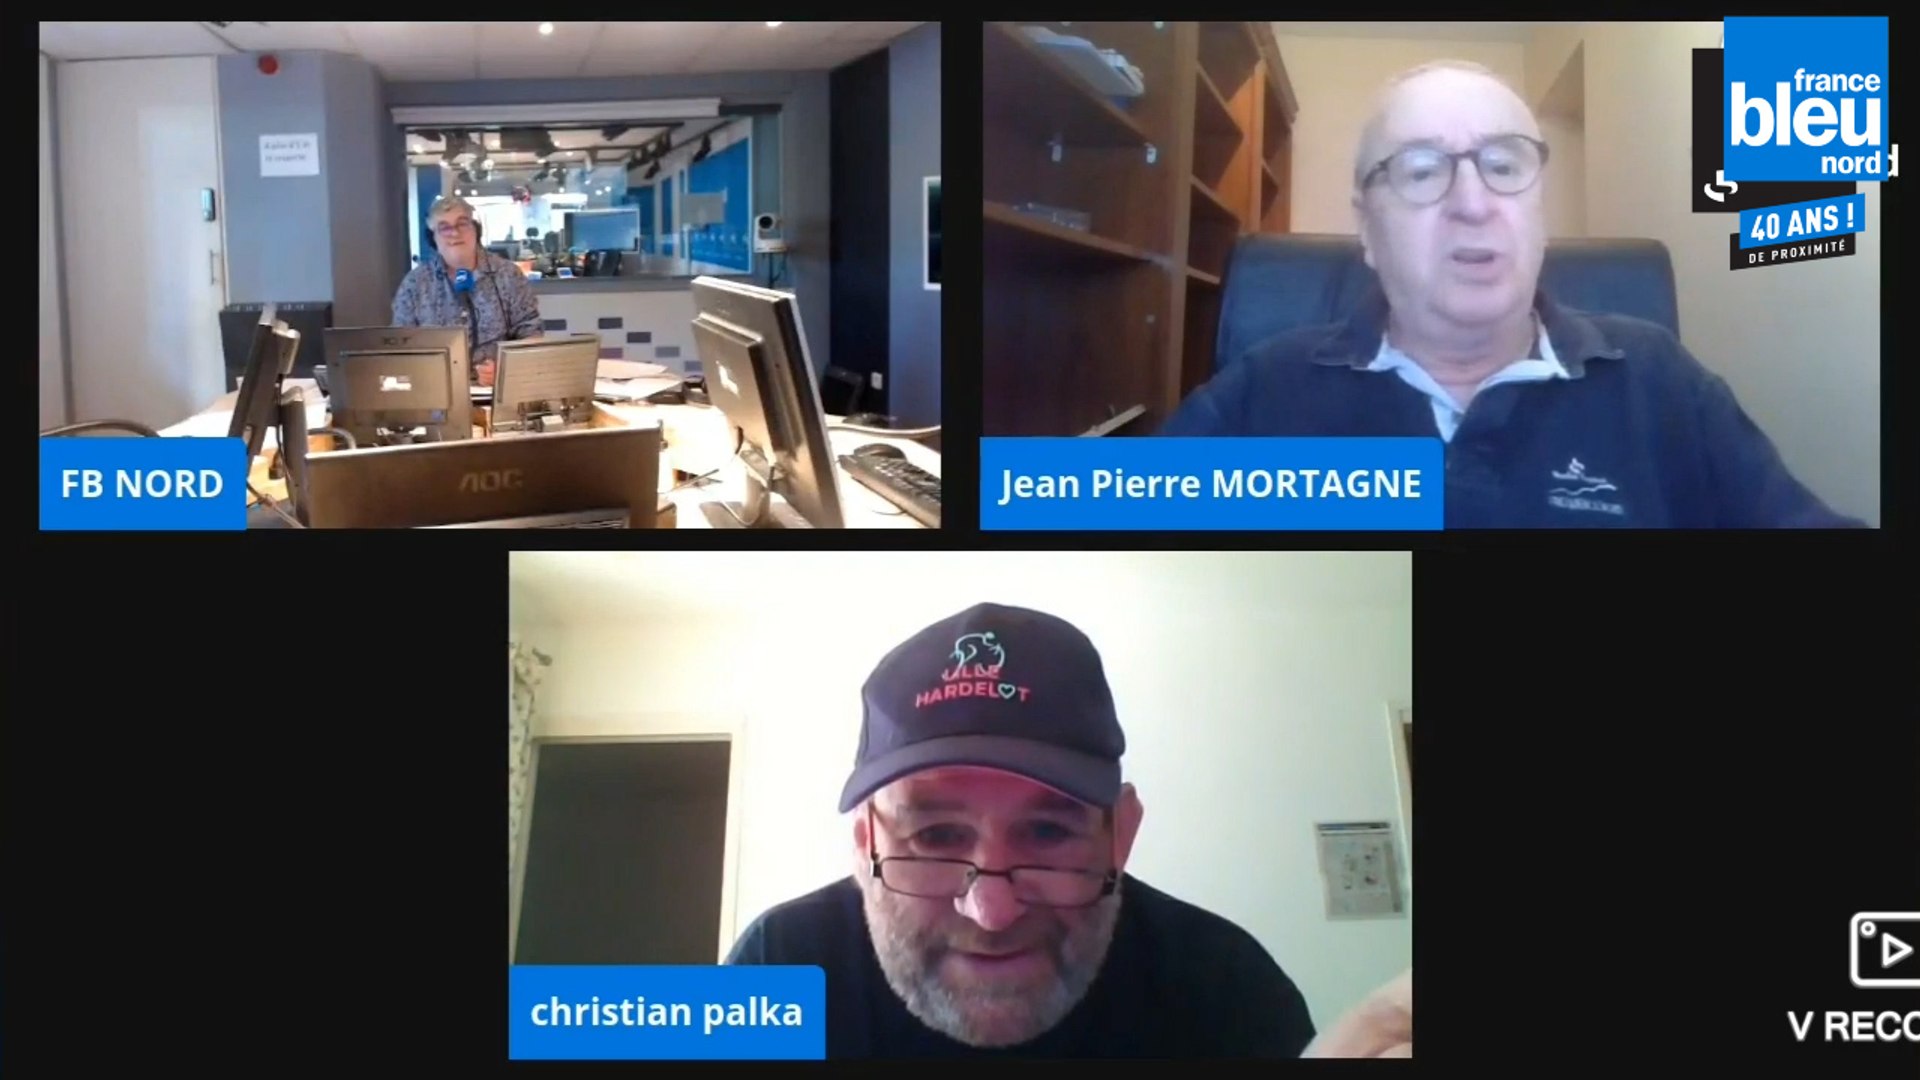 40 ans de France Bleu Nord : Jean-Pierre Mortagne et Christian Palka les  sportifs - Vidéo Dailymotion